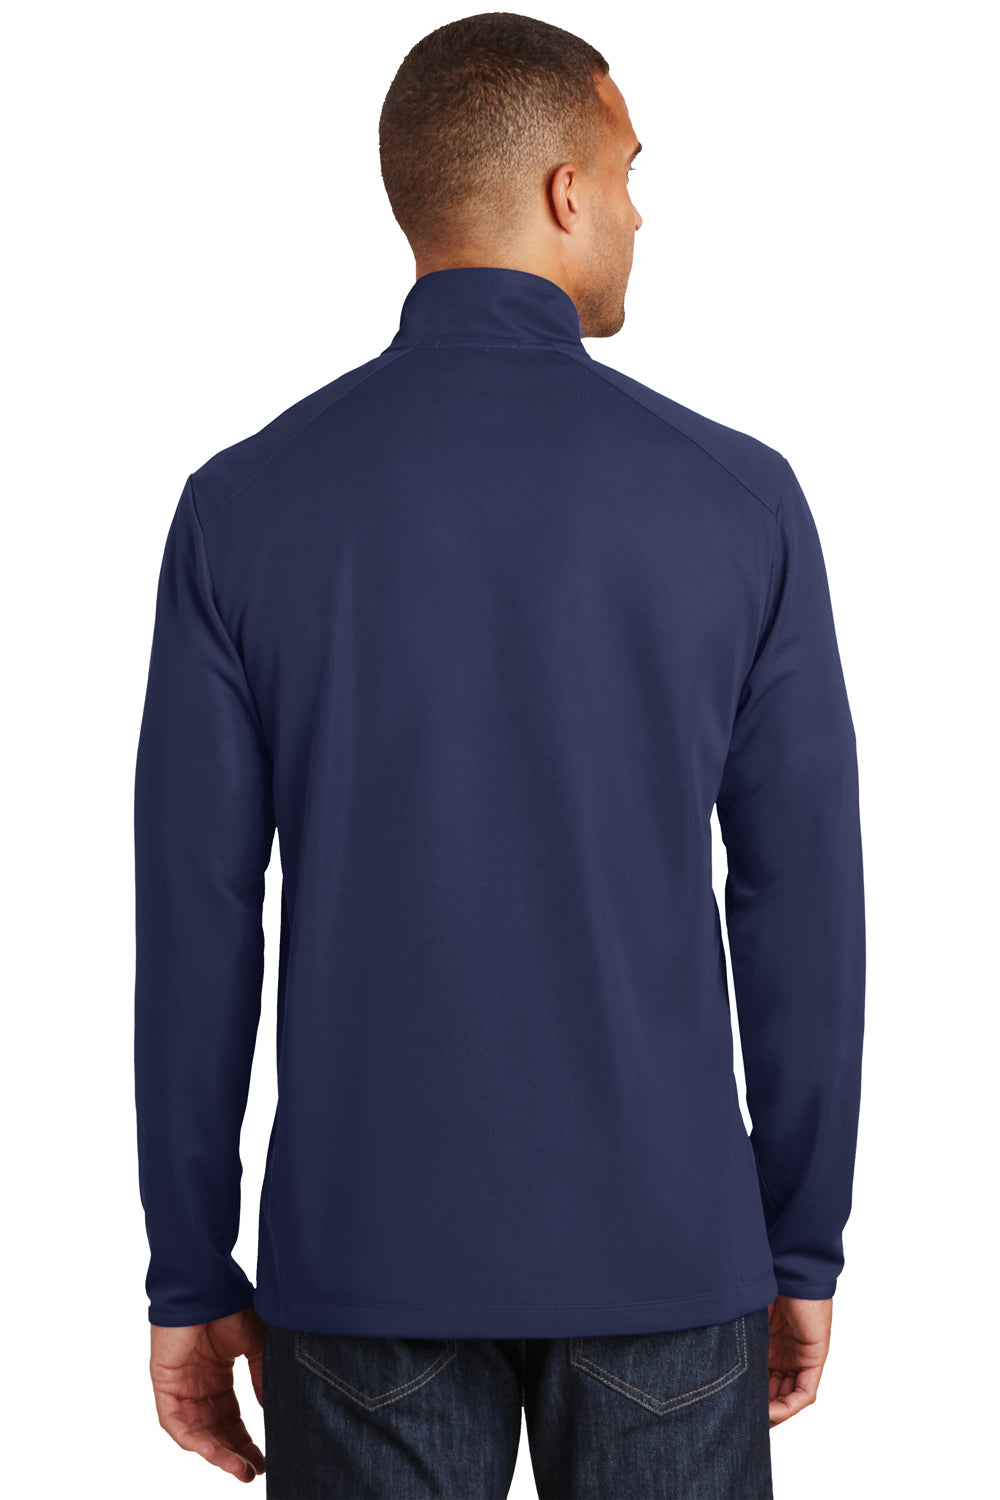 Port Authority K806 Mens Moisture Wicking 1/4 Zip Sweatshirt Navy Blue Back